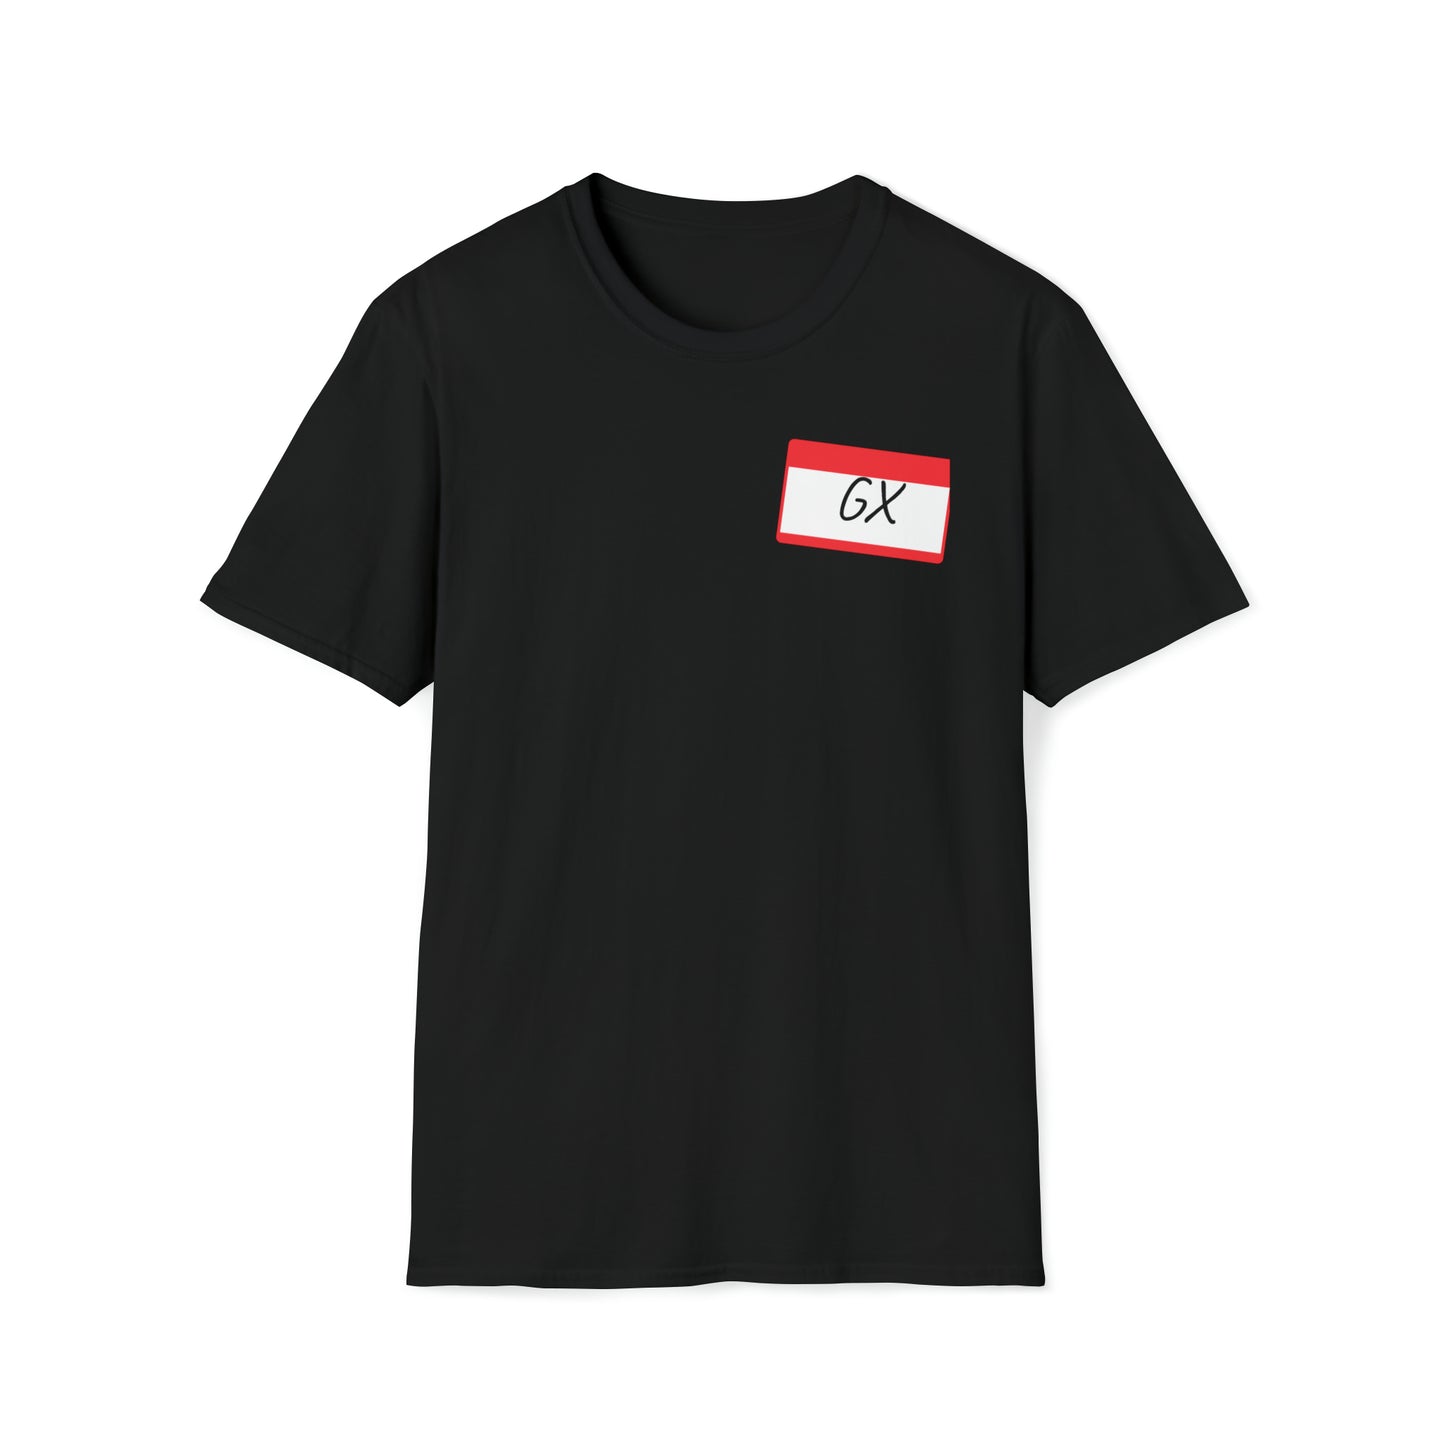 GX Unisex Softstyle T-Shirt